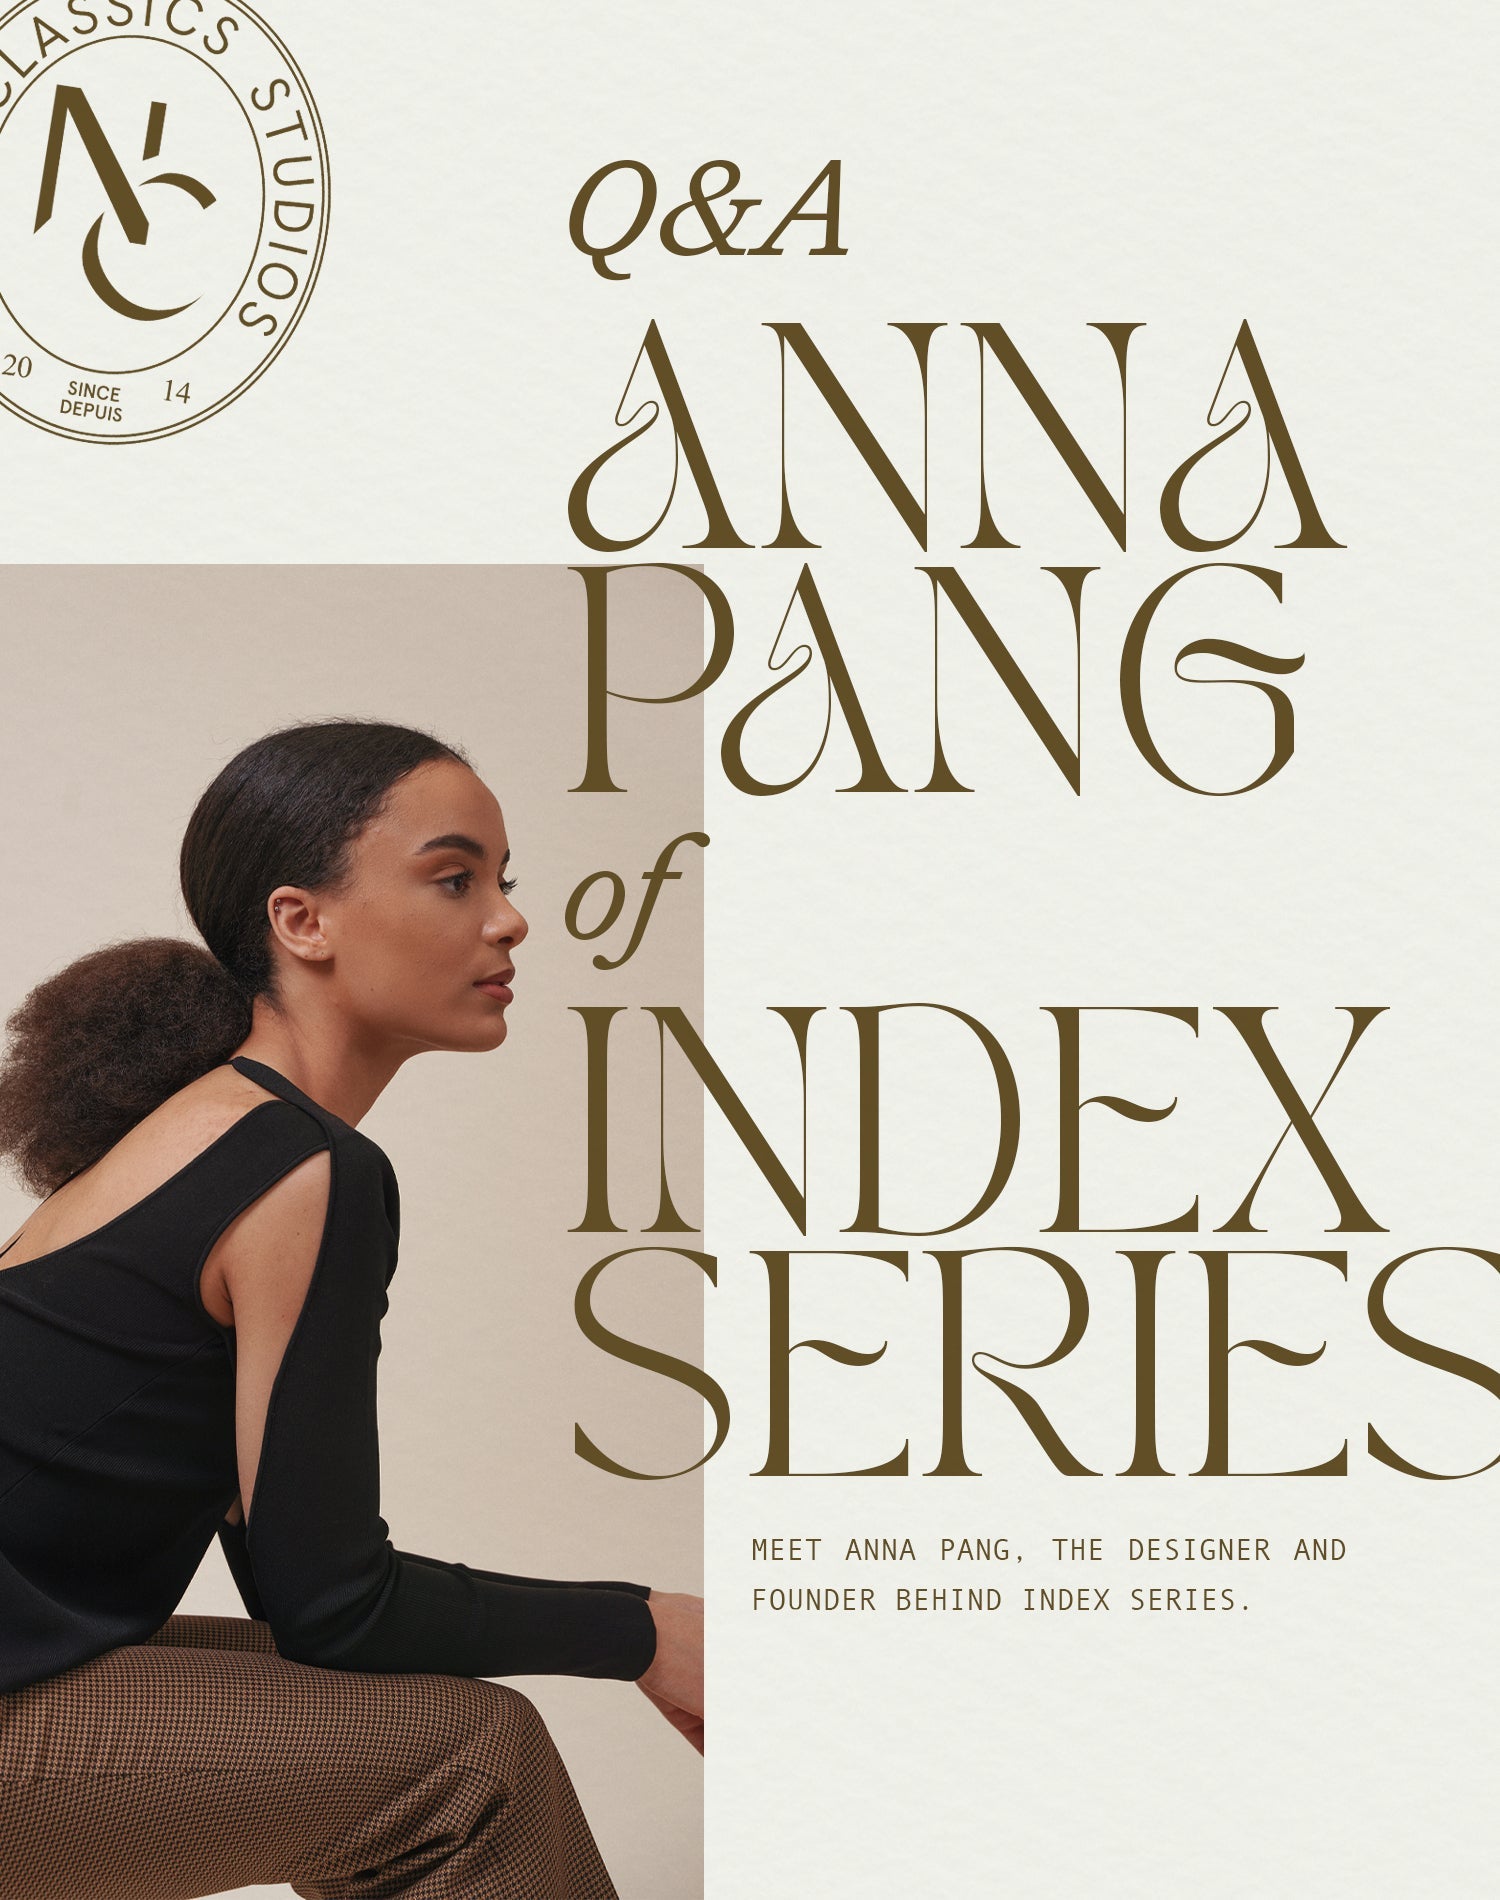 Q&A • Anna Pang of Index Series